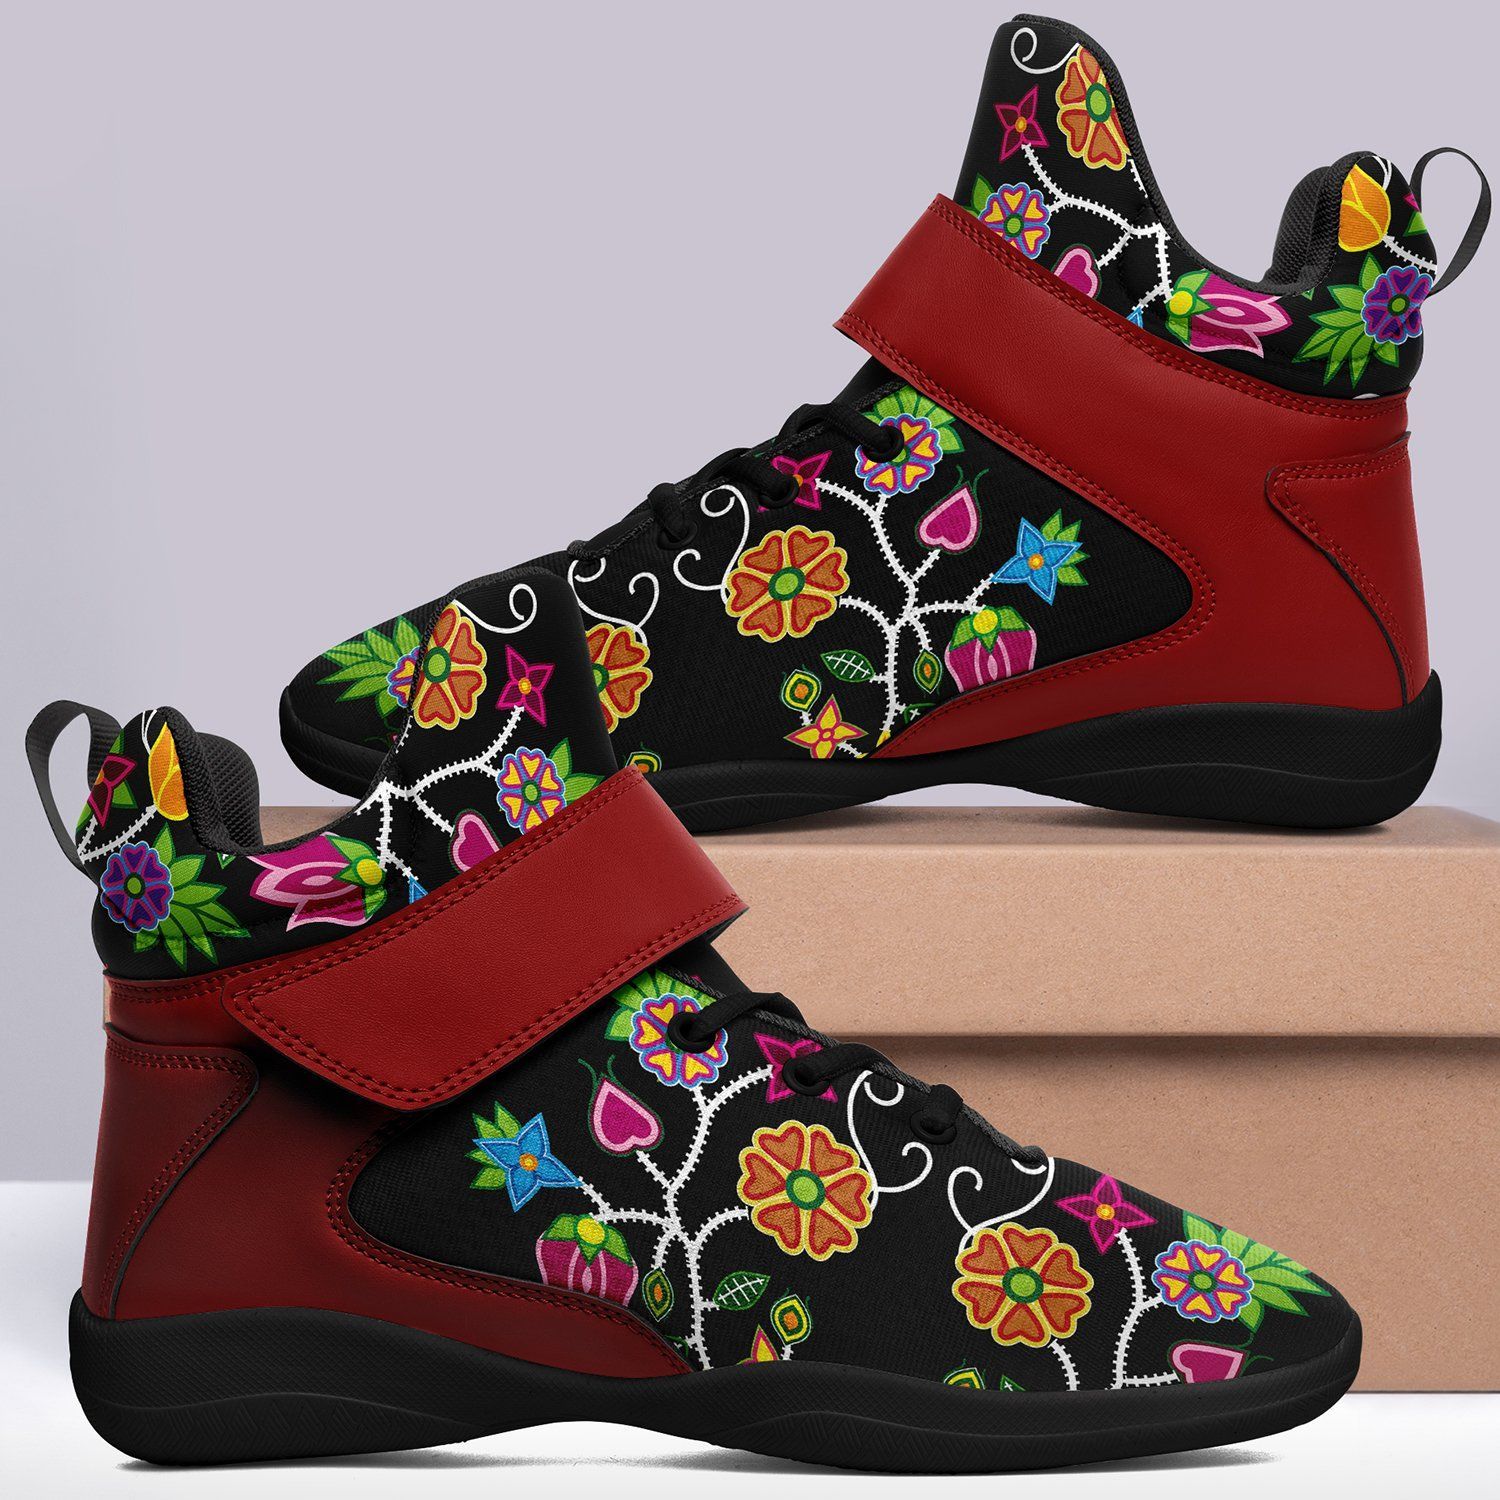 Floral Beadwork Ipottaa Basketball / Sport High Top Shoes - Black Sole 49 Dzine 